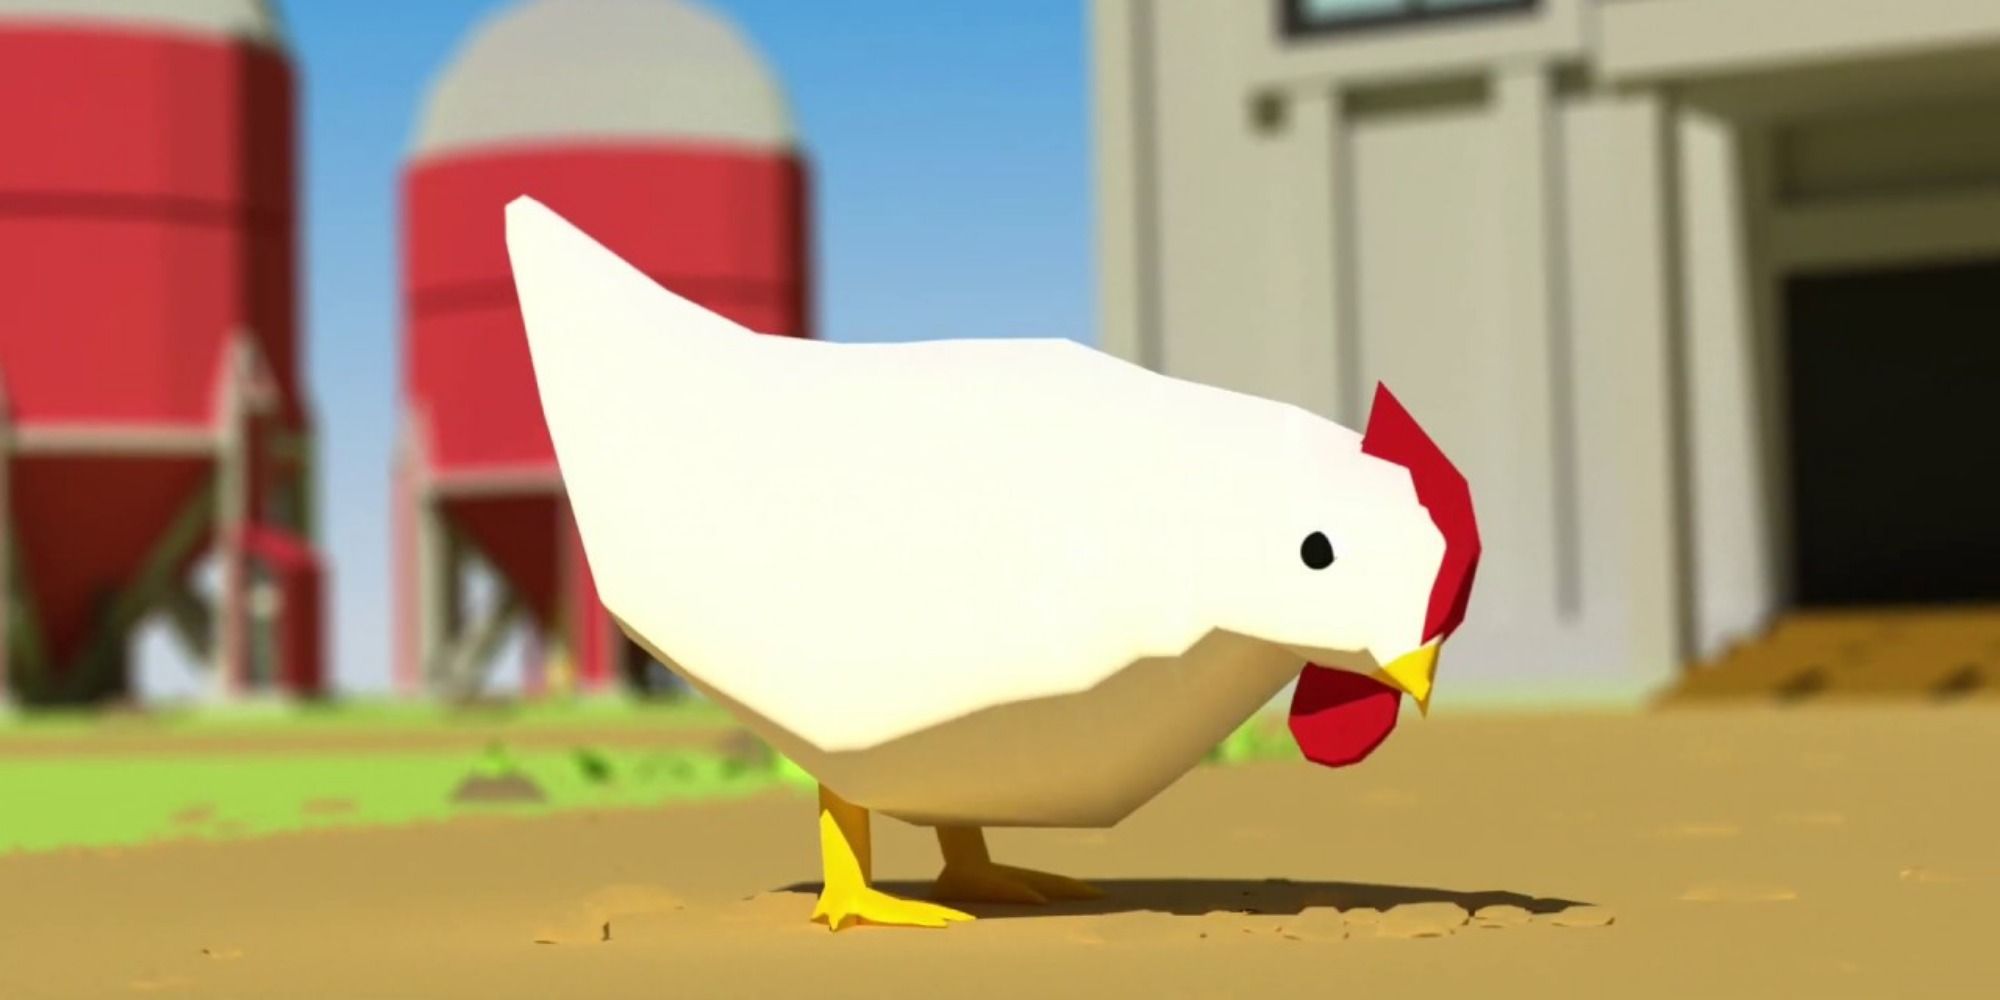 A chicken pecks the grown outside a farm